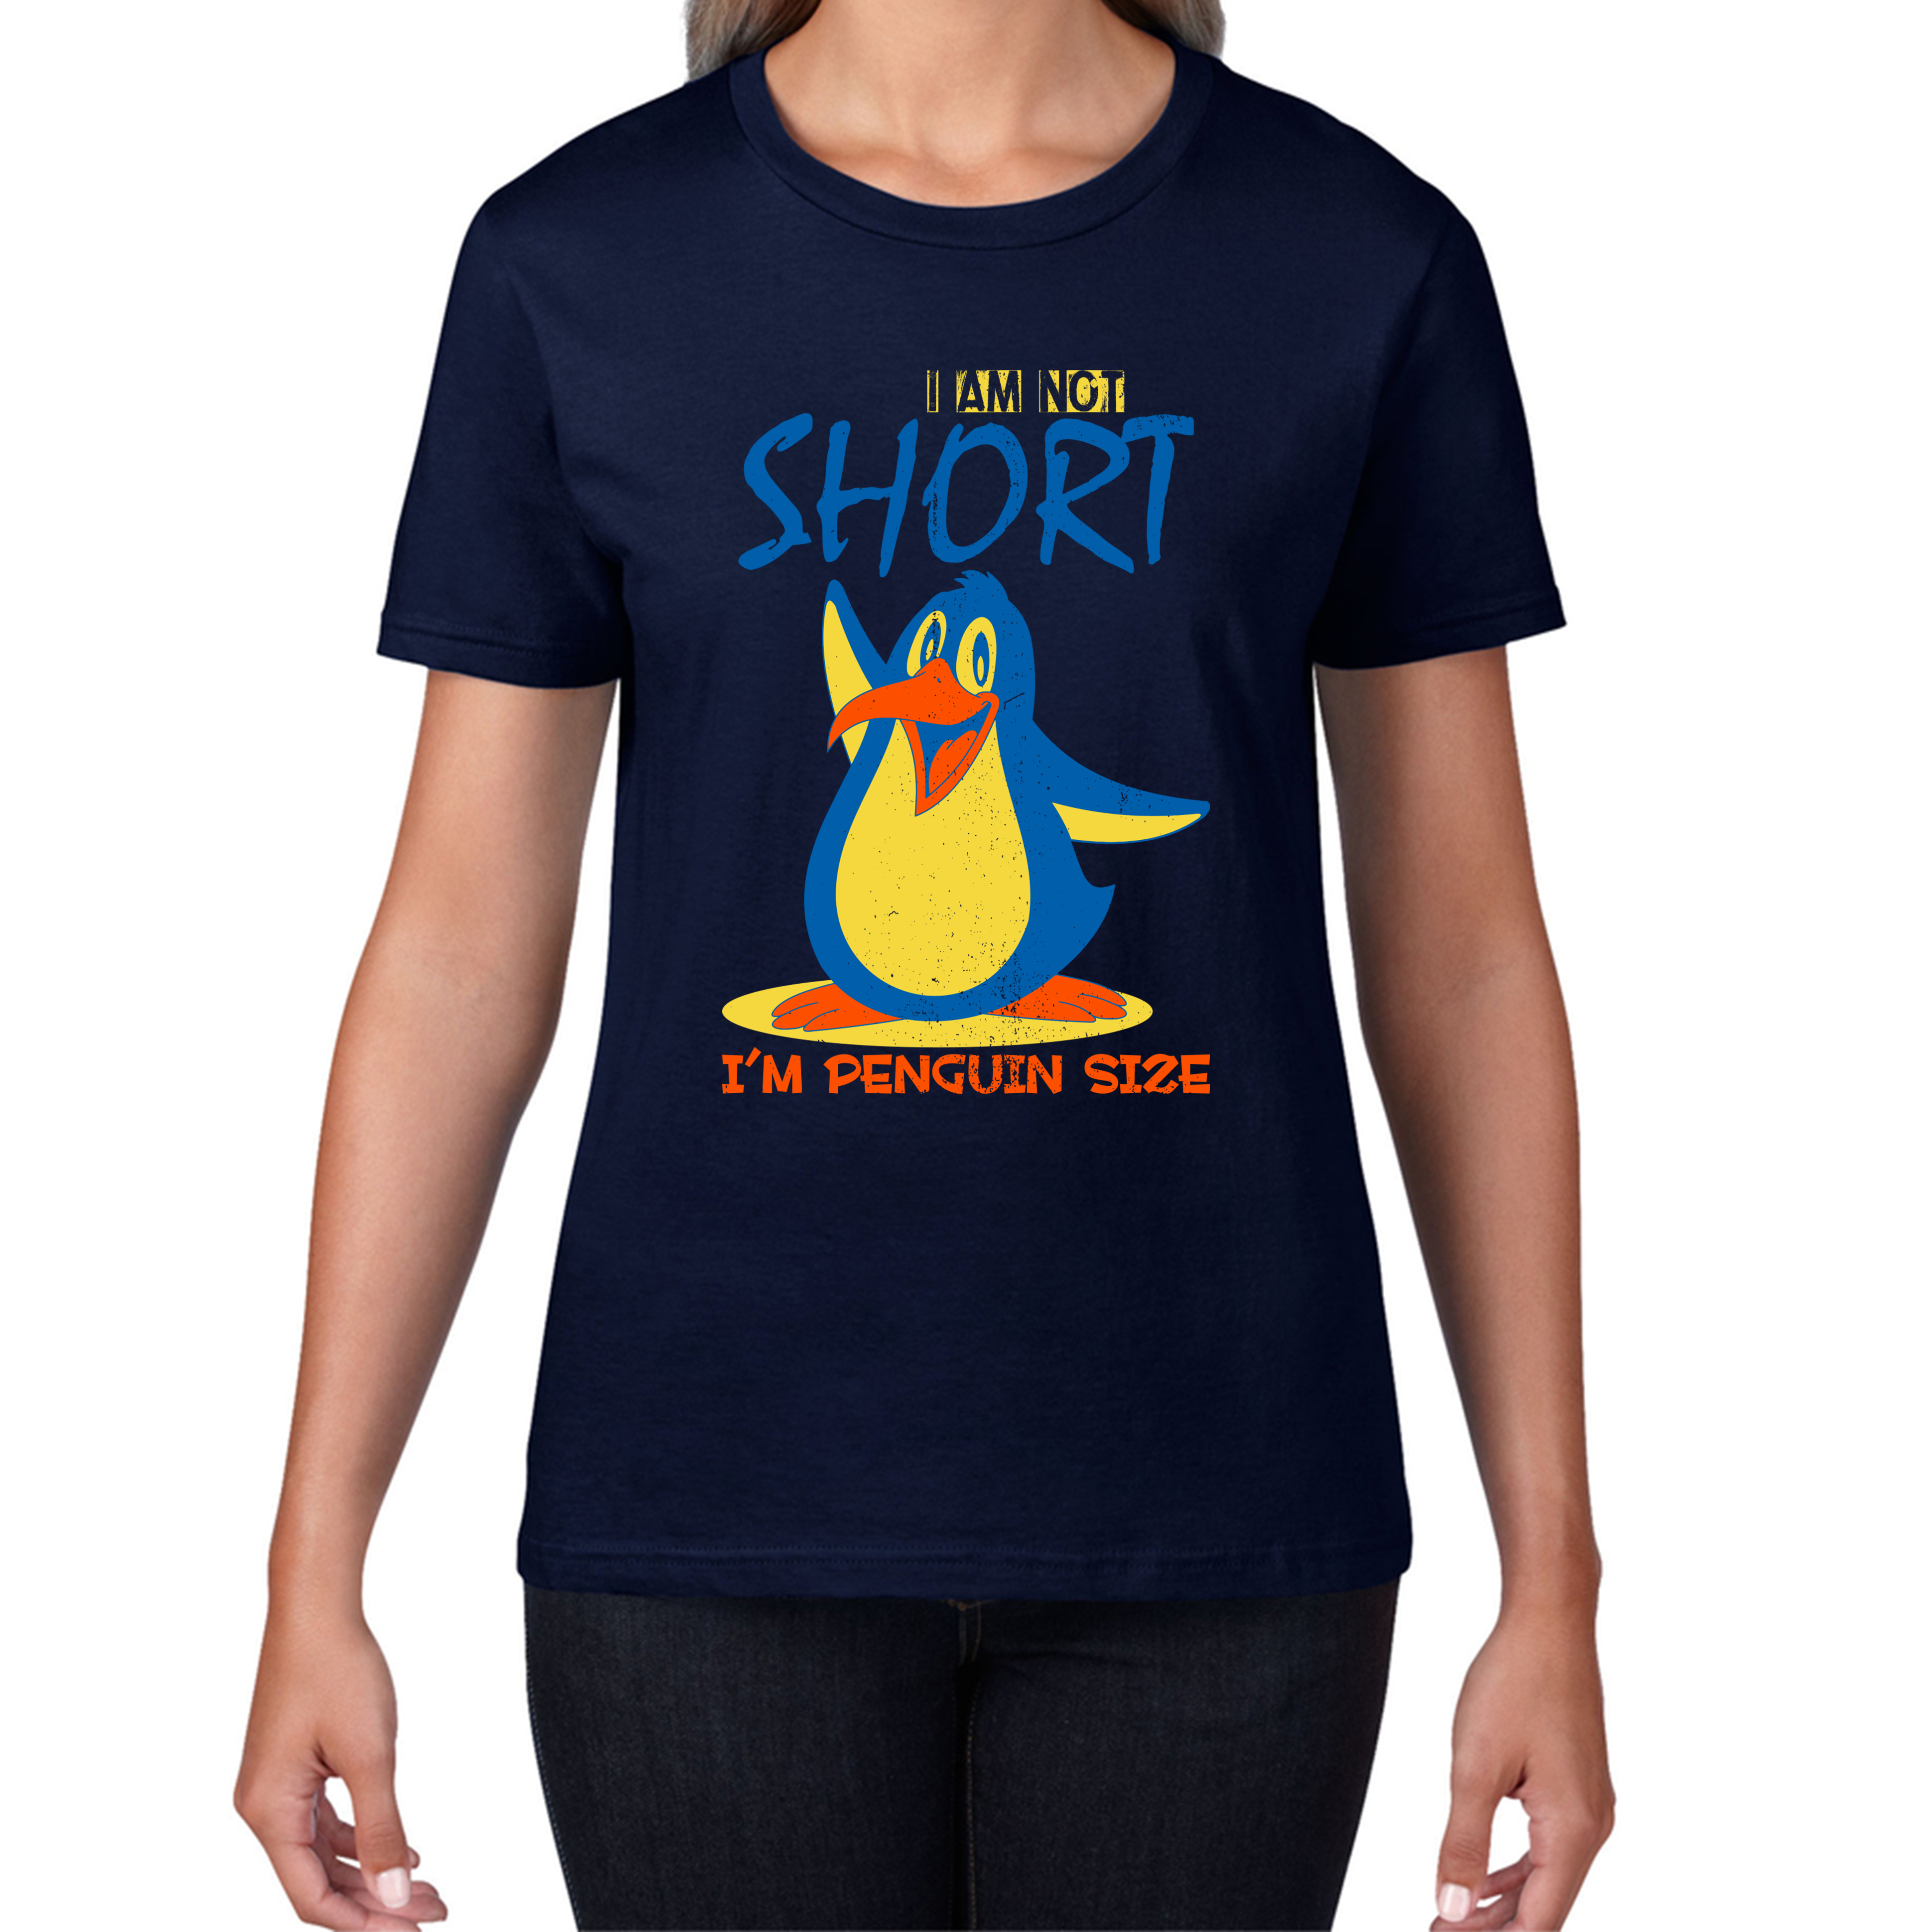 I Am Not Short I'm Penguin Size Funny Penguin Design Animal Saying Womens Tee Top